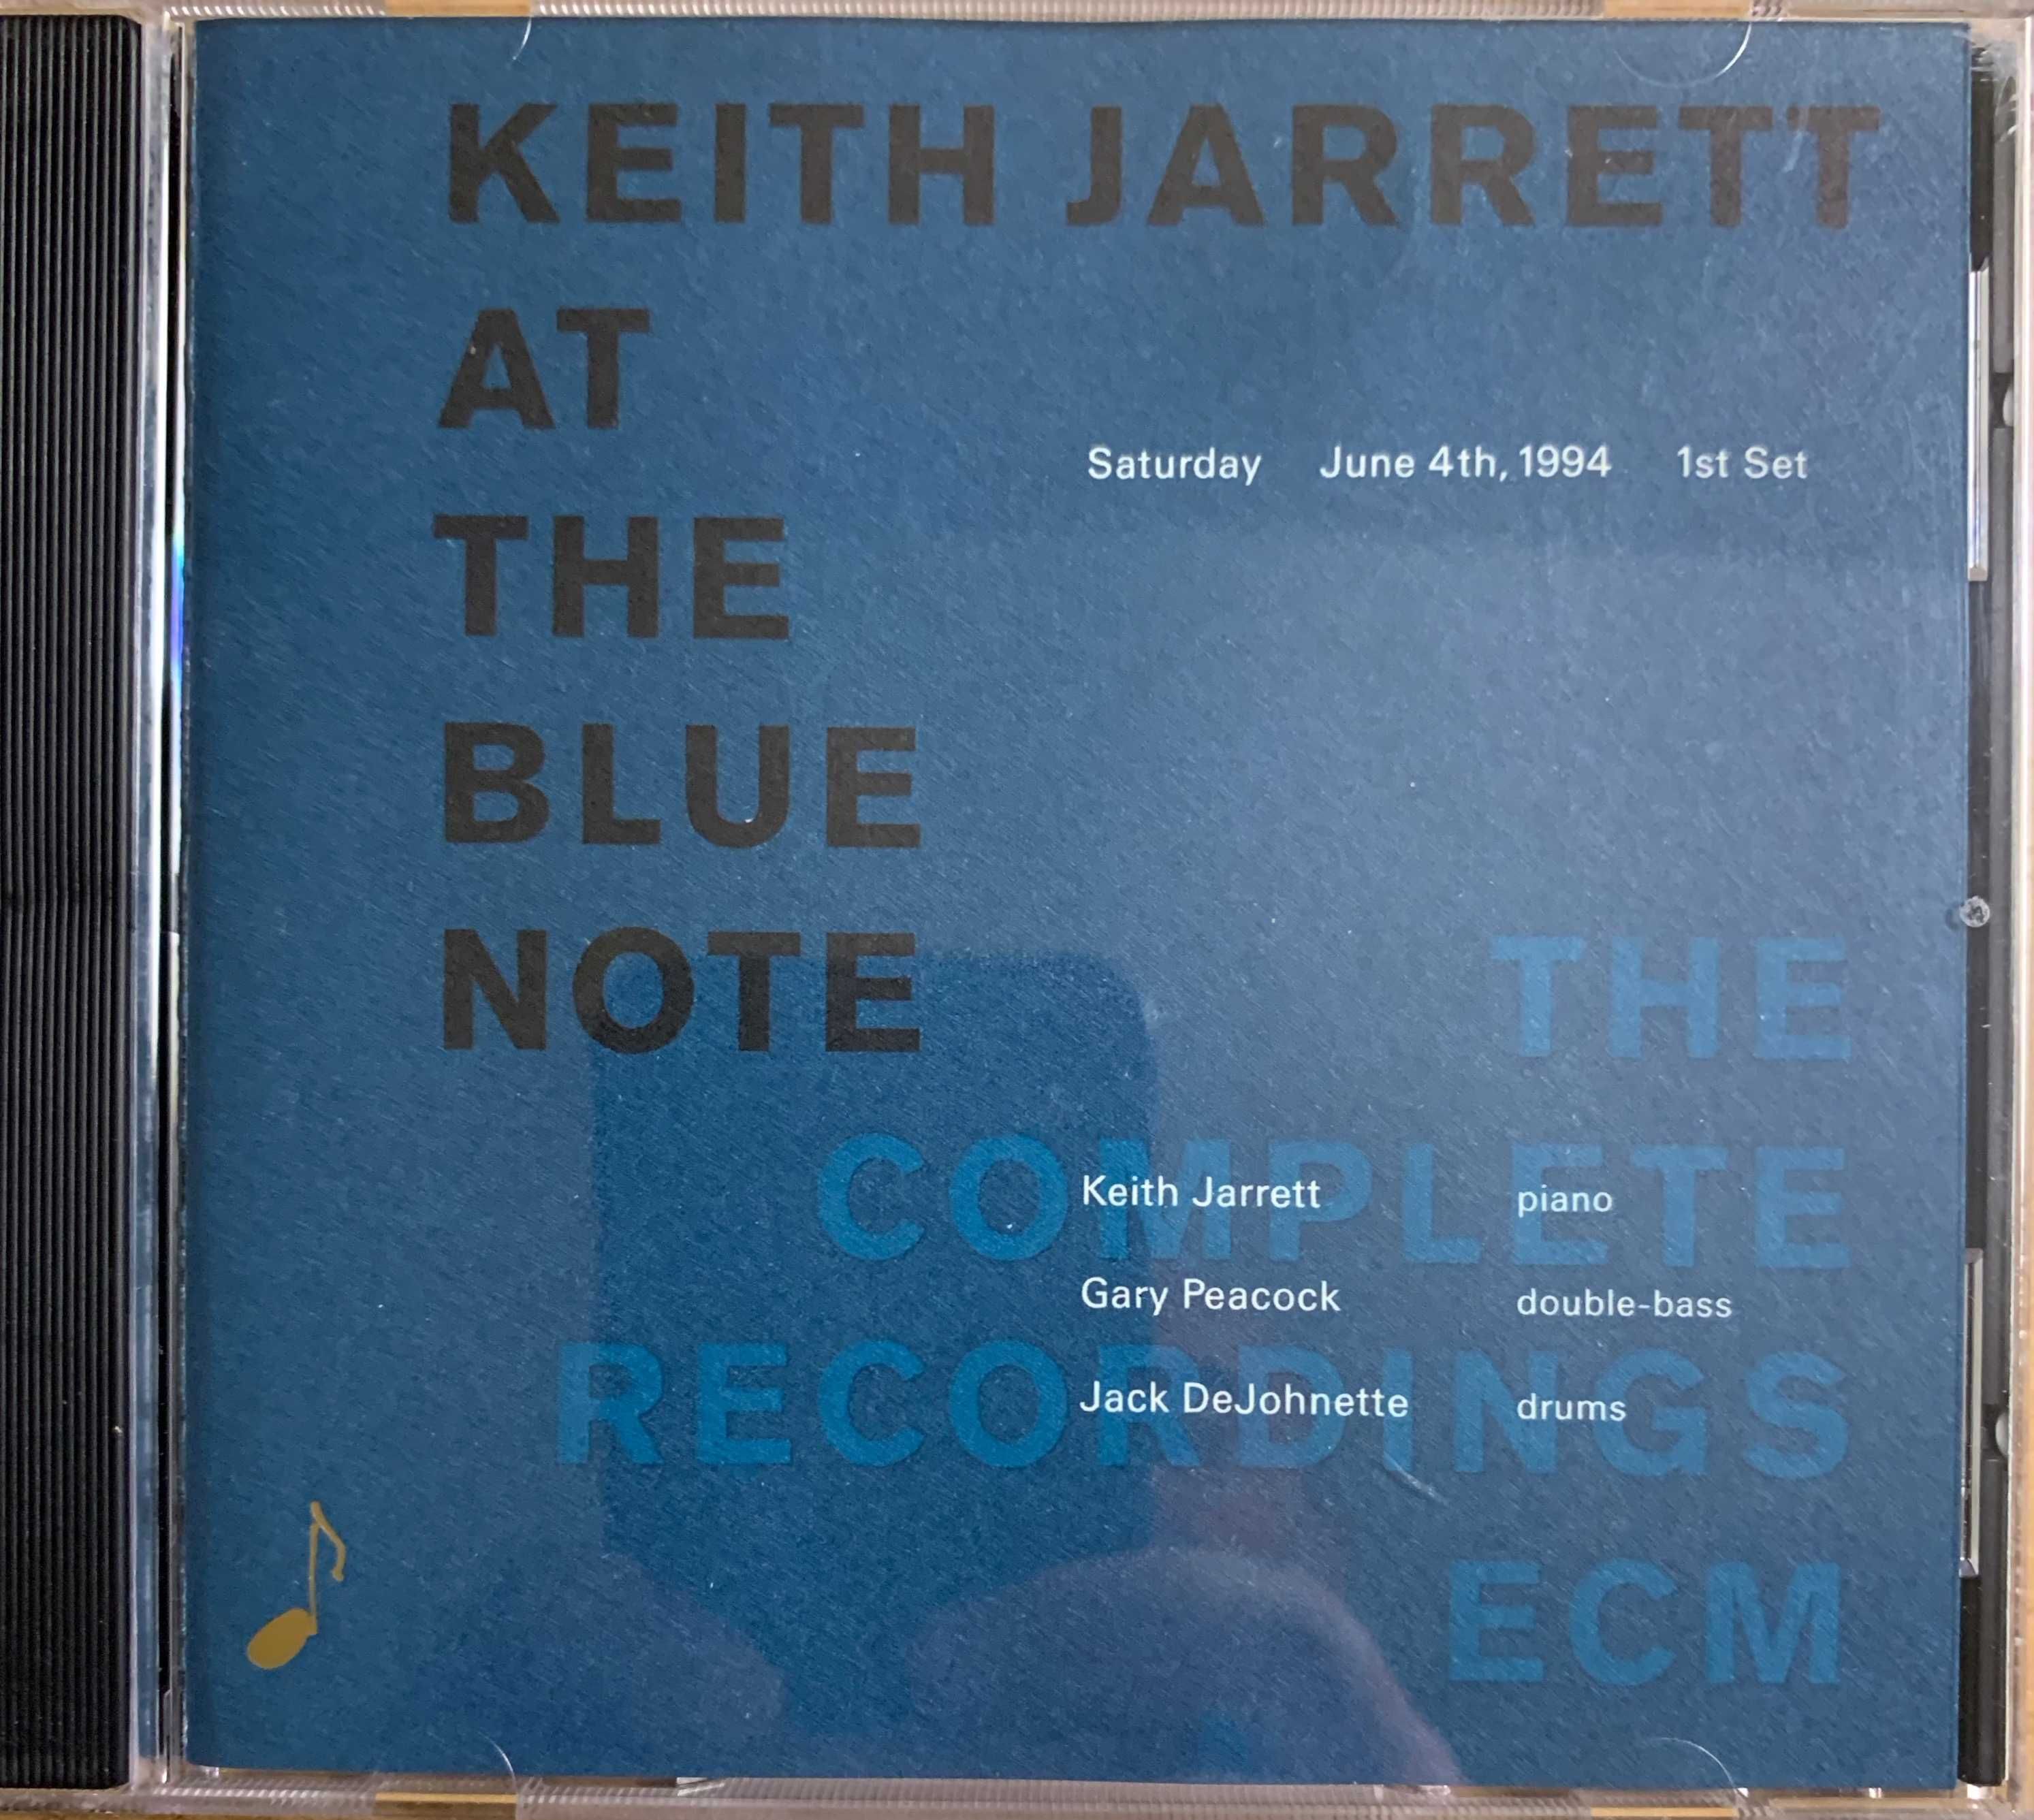 Keith Jarrett At The Blue Note - Saturday, June 4th 1994, 1st Set, ECM